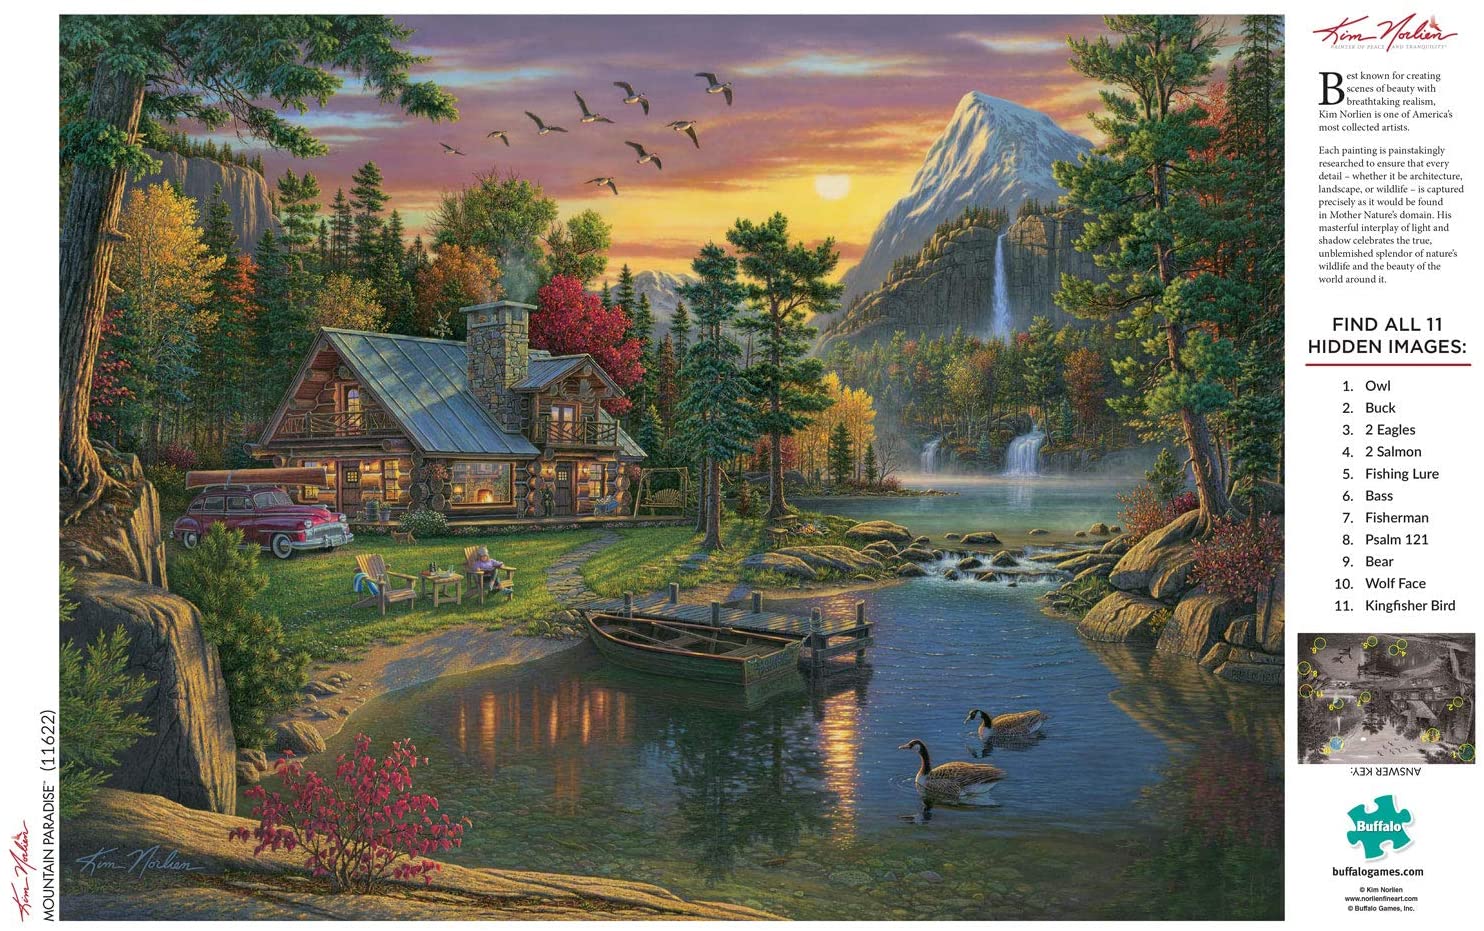 Ceaco Thomas Kinkade Nature's Paradise Puzzle, 1500 Piece